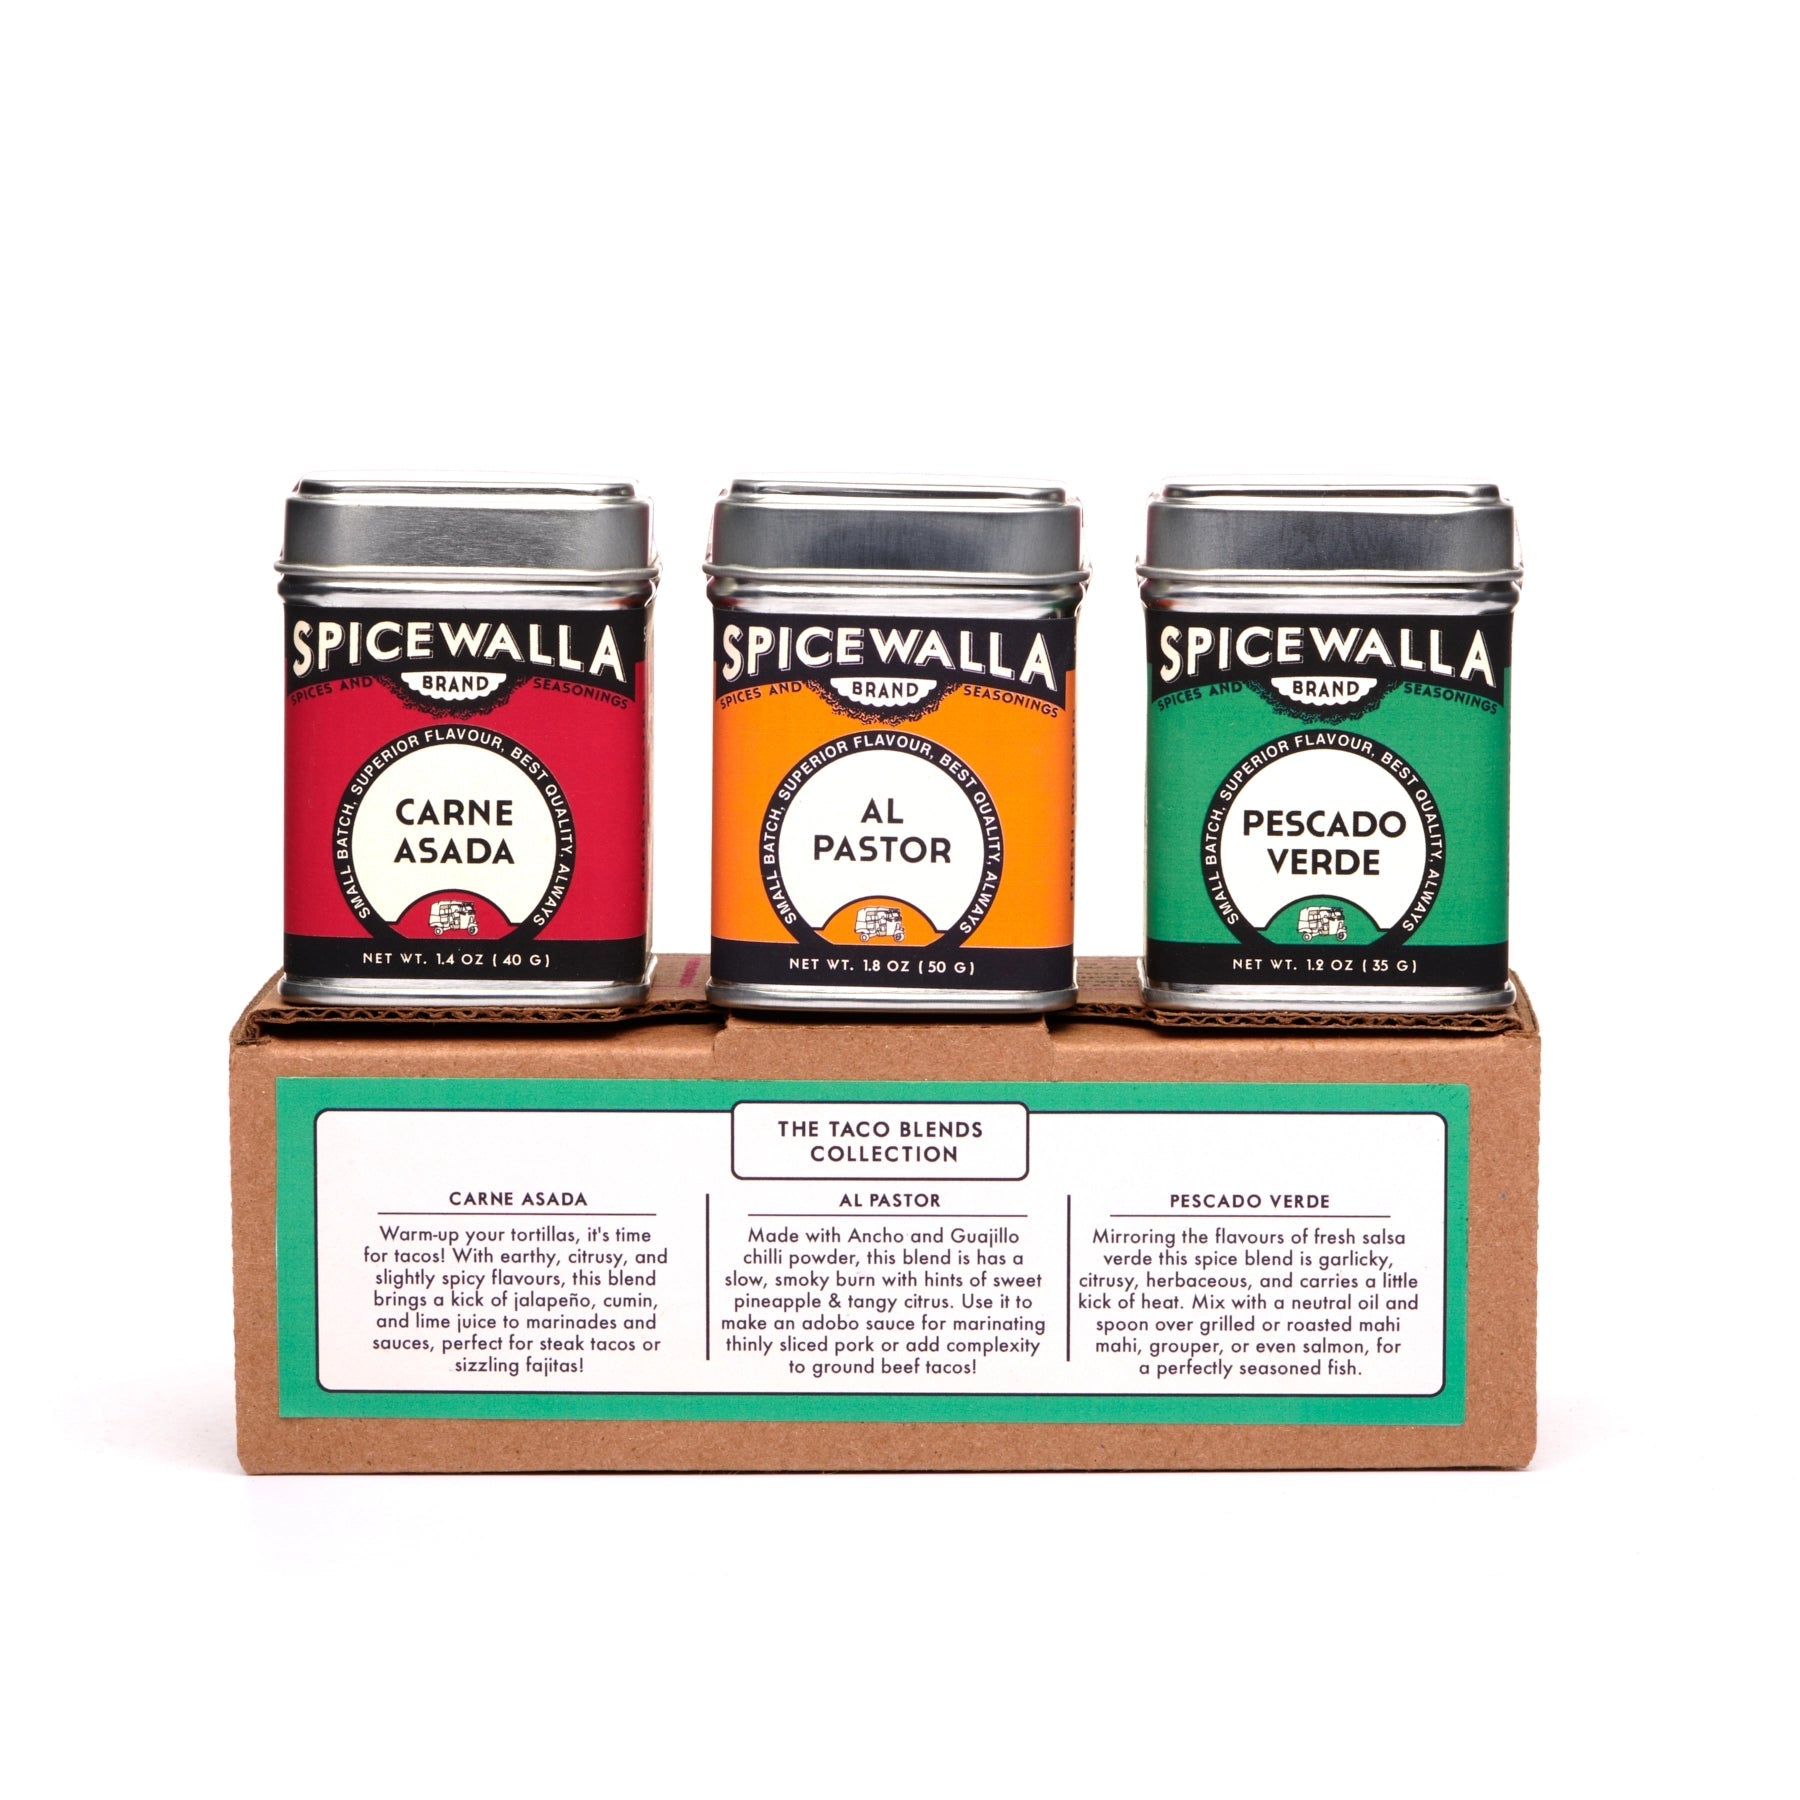 TheTaco Collection from Spicewalla contains 3 spices: Carne Asada Rub, Al Pastor Rub, and Pescado Verde Seasoning in small tins.  